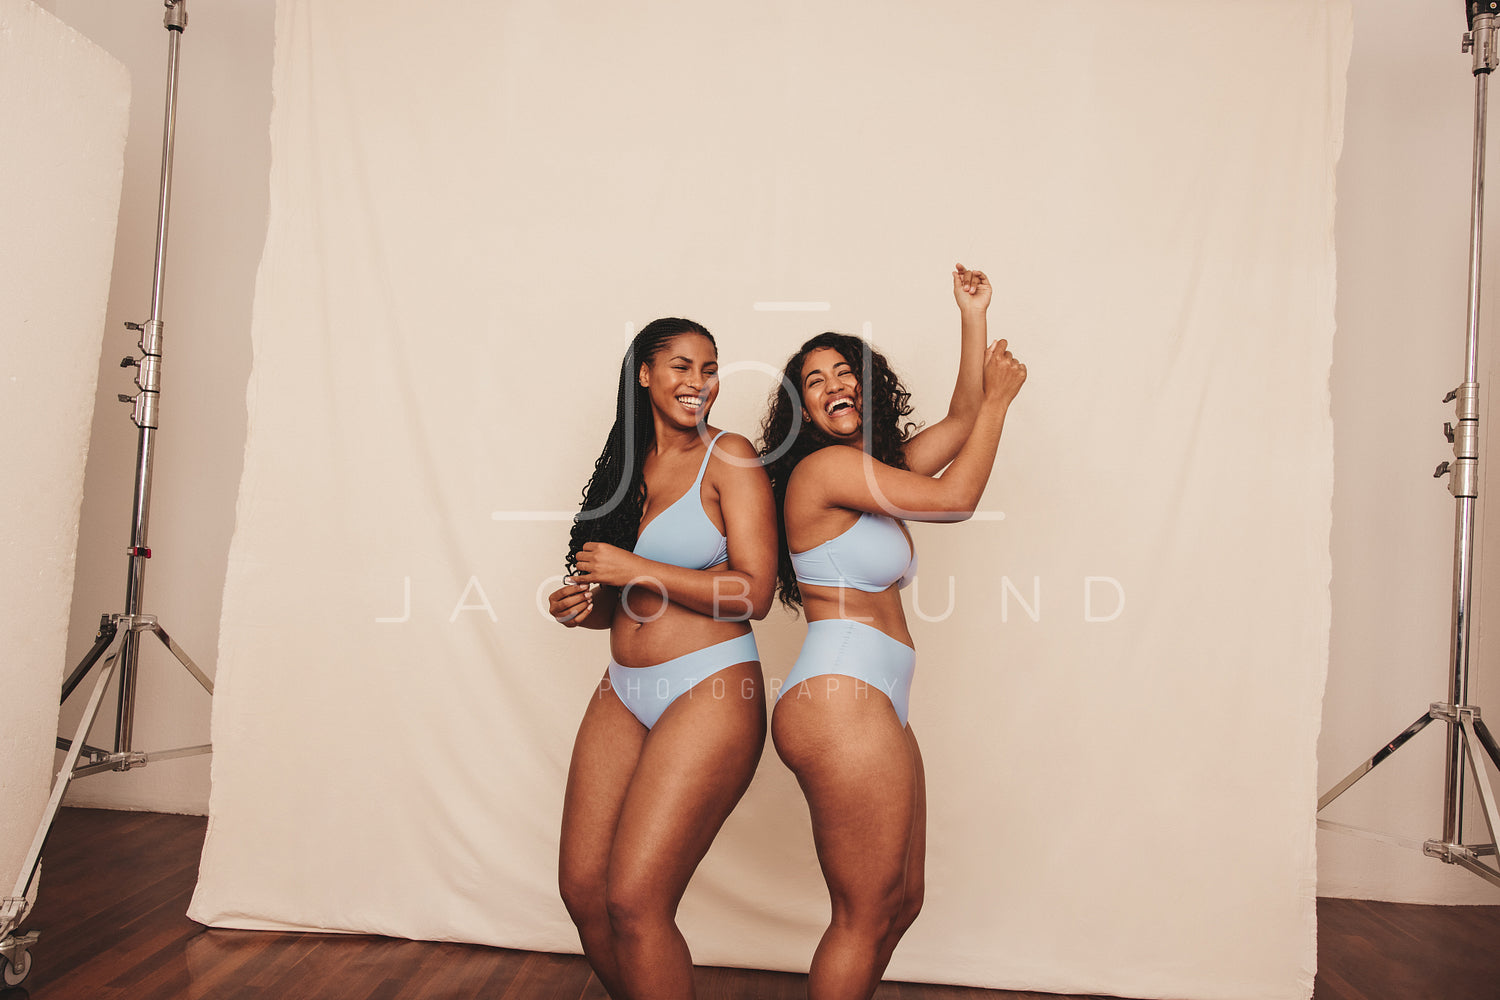 Cheerful young women dancing while wearing blue underwear – Jacob